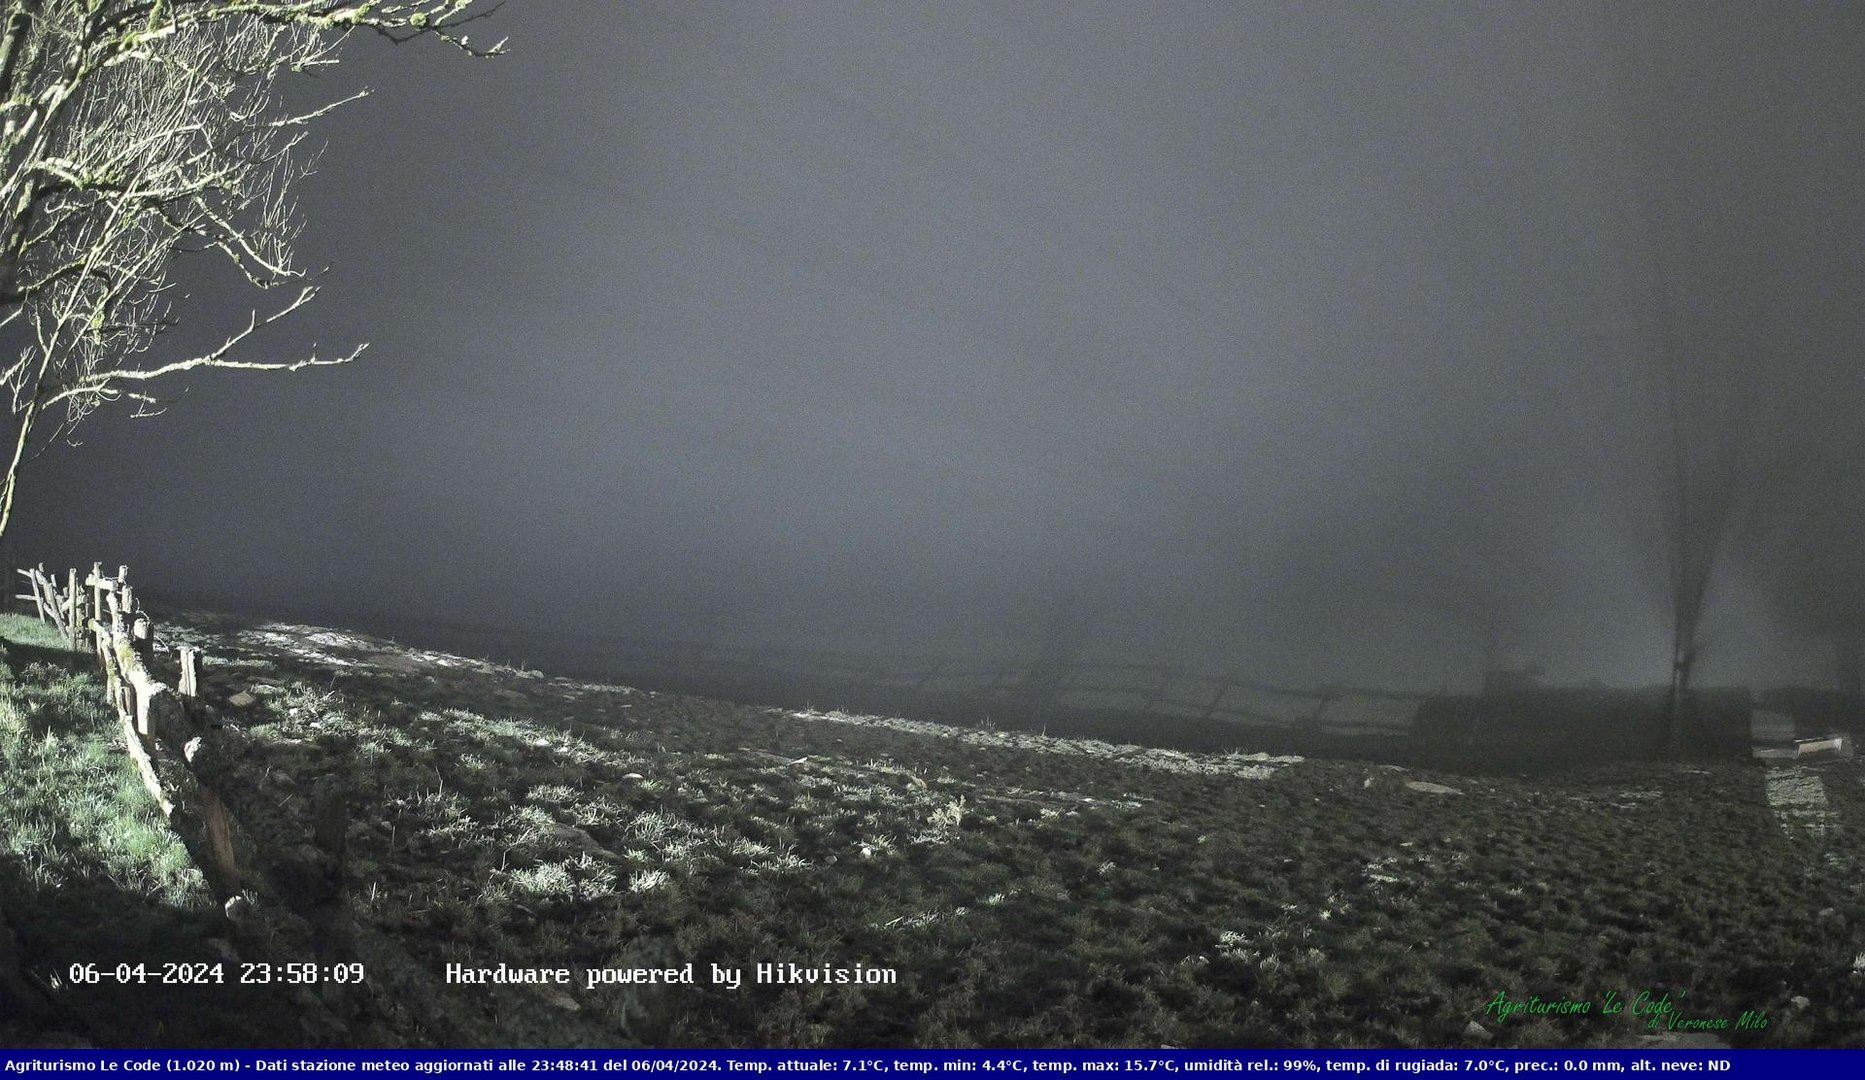 time-lapse frame, Webcam Cansiglio - verso la piana dei "Bech" webcam